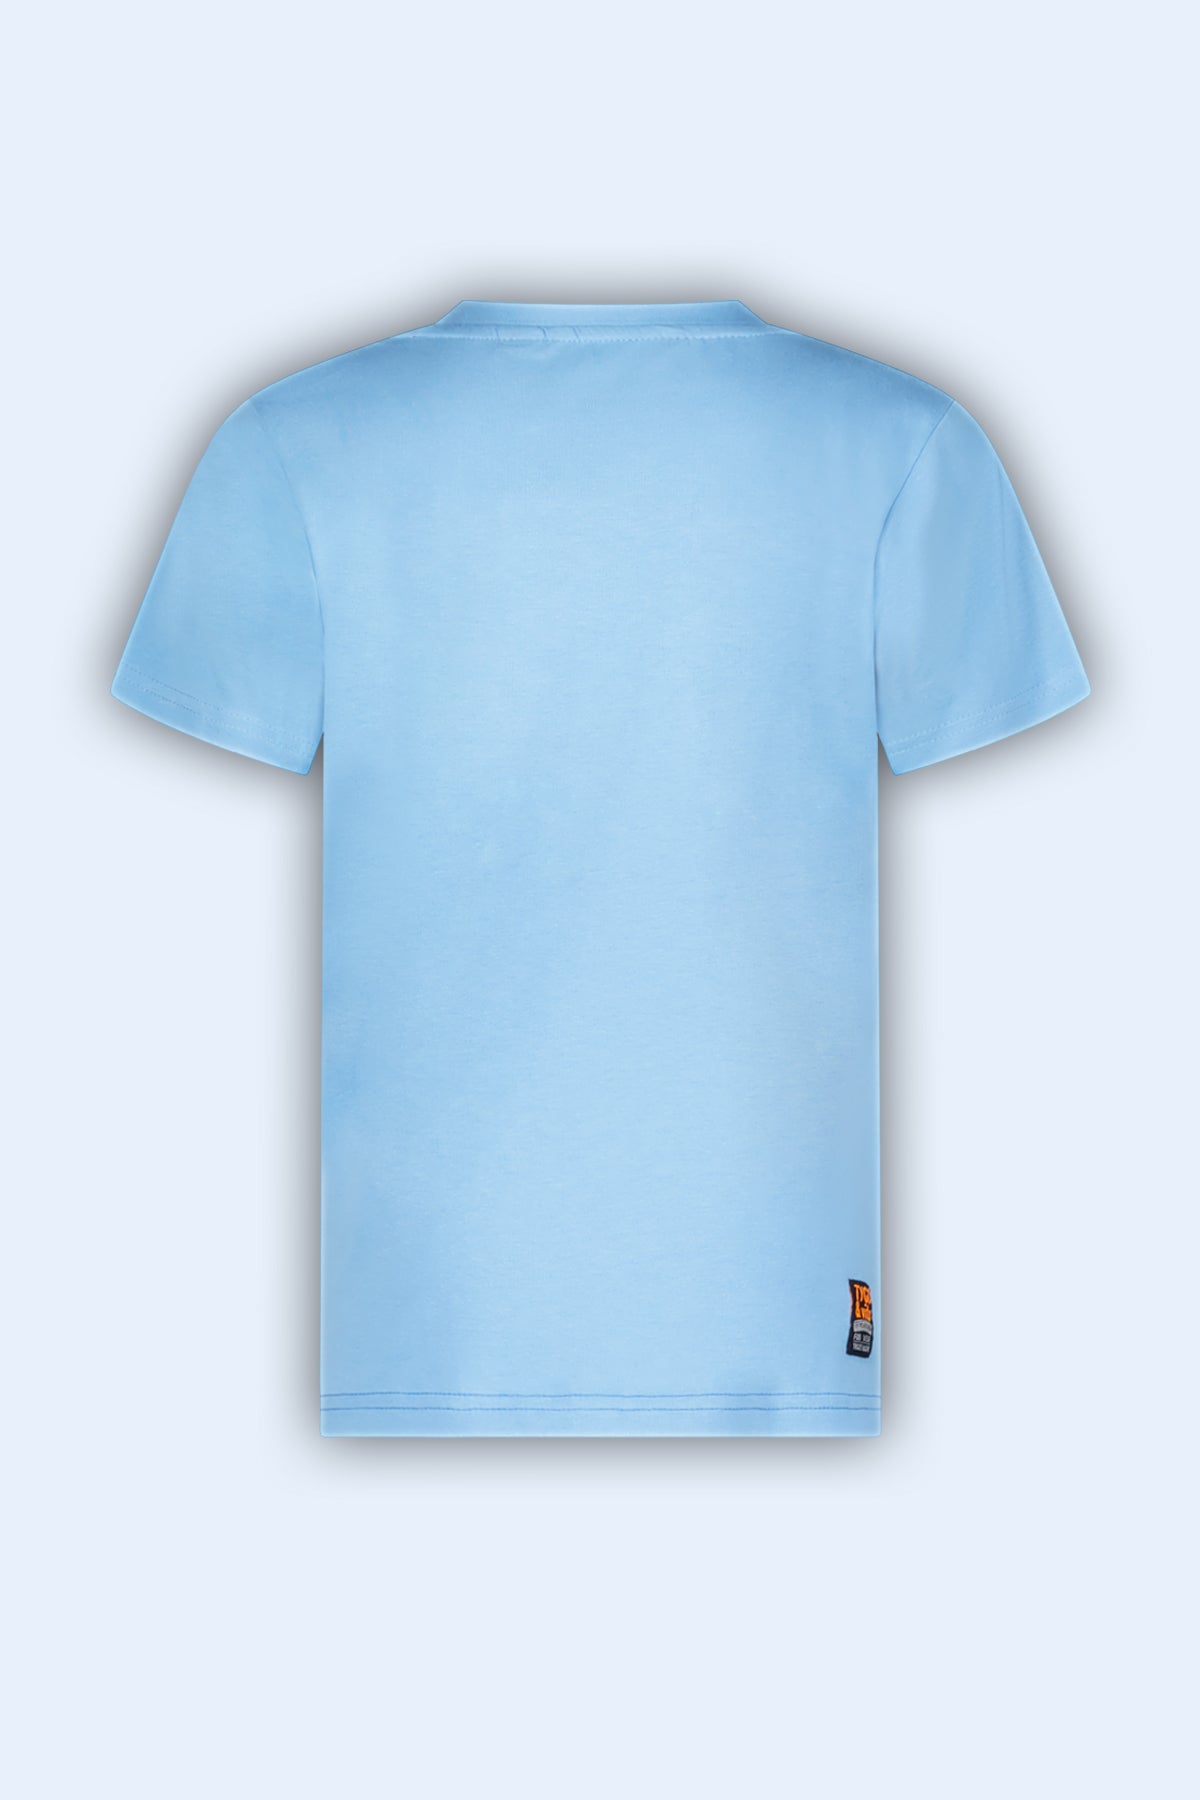 T-shirt Twan licht blauw